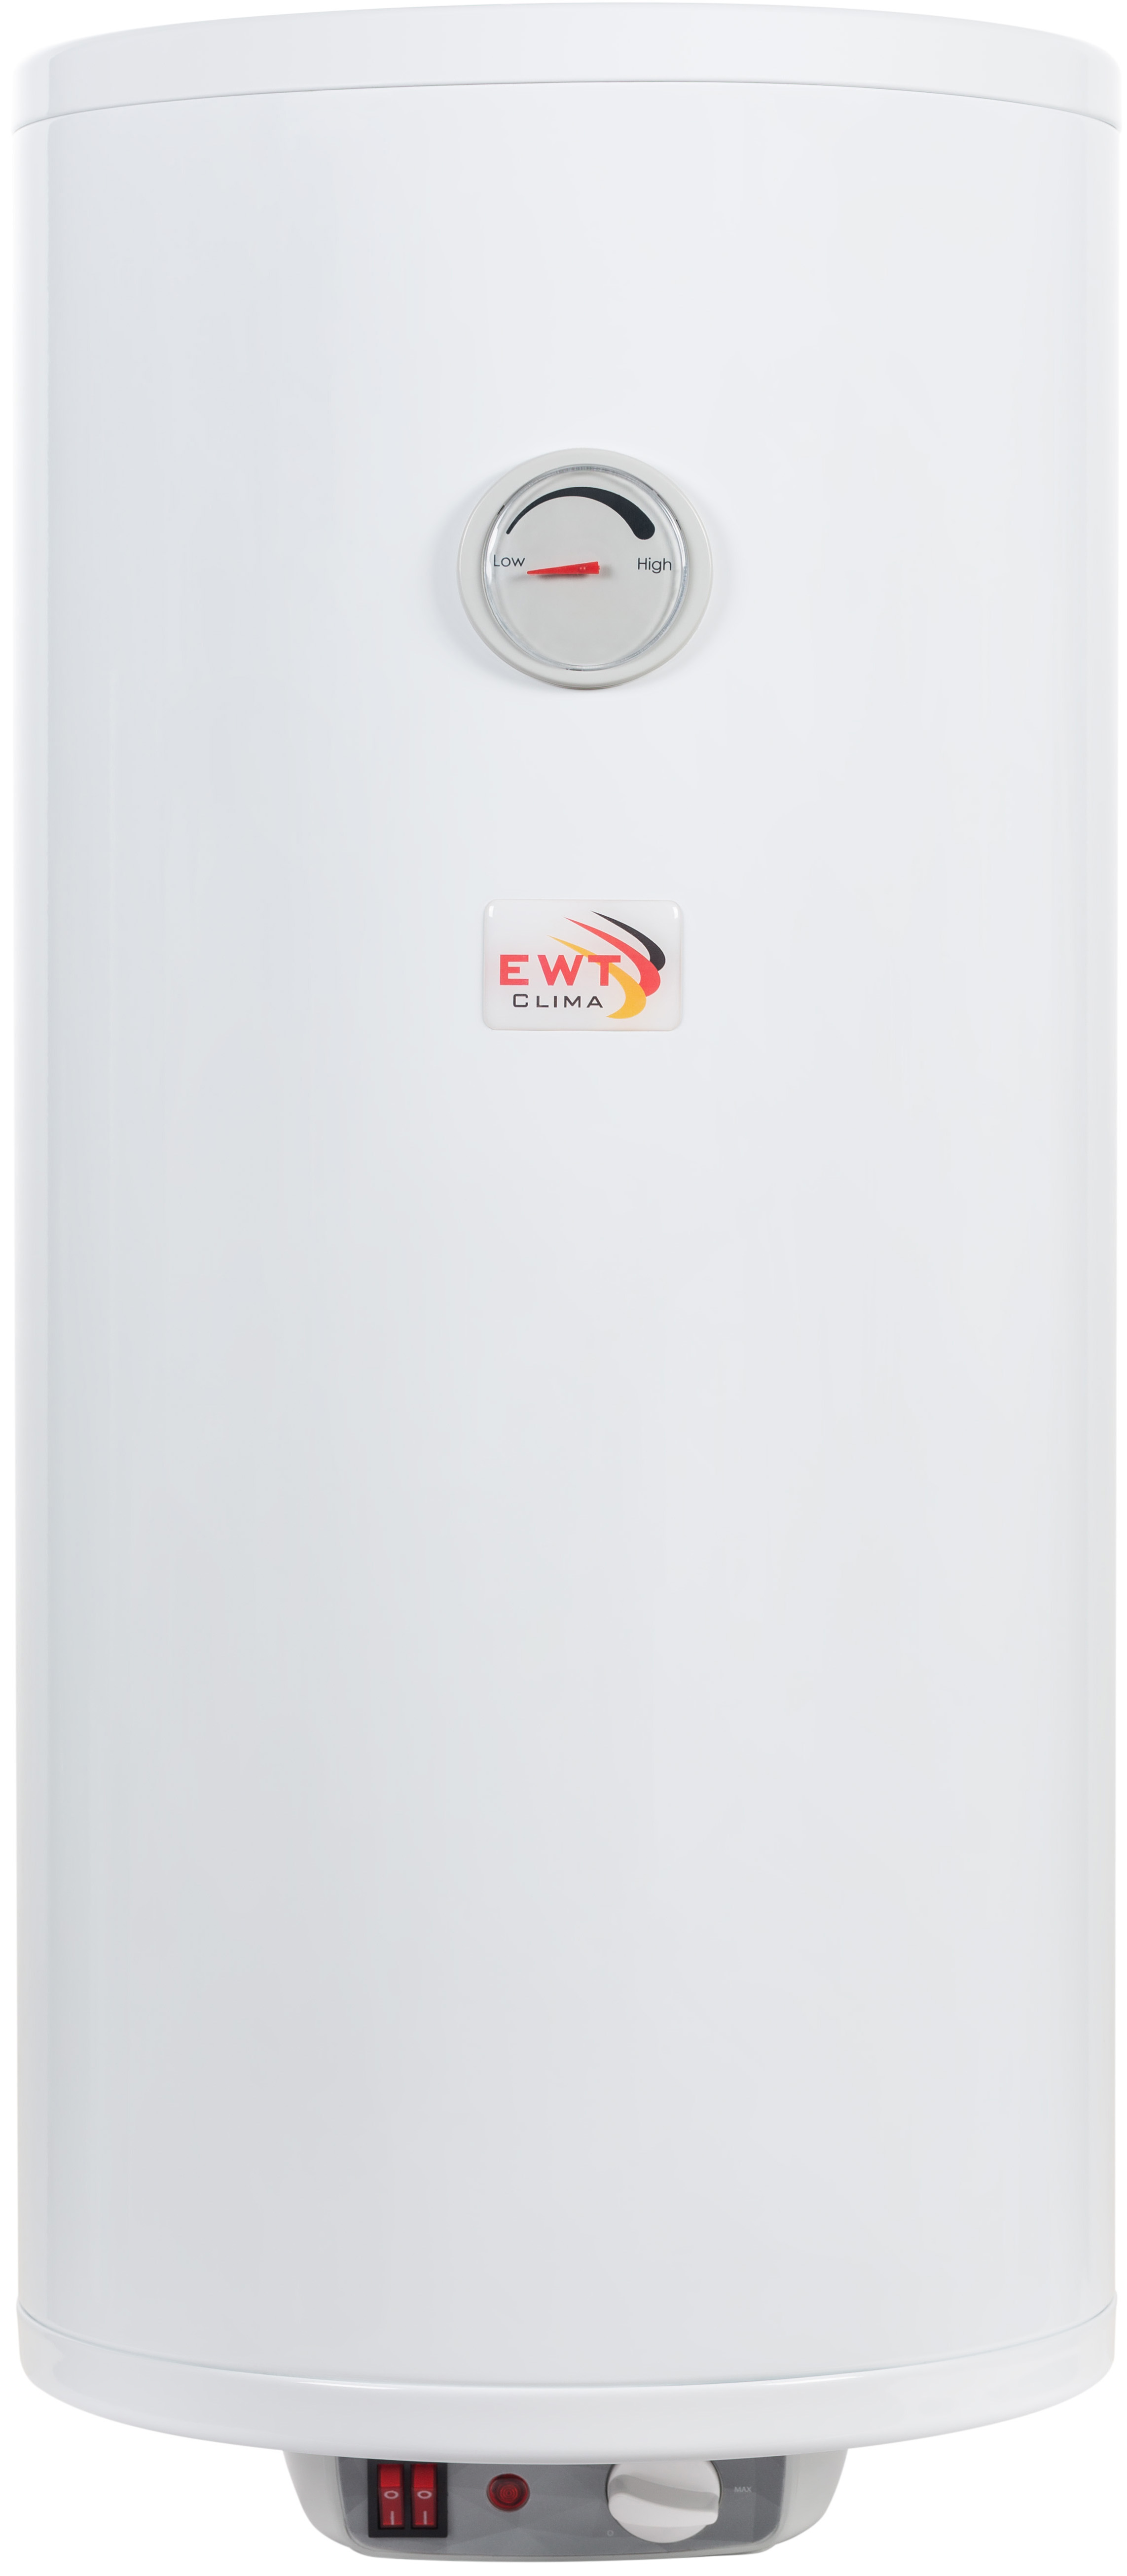 Бойлер EWT Clima Runde Dry Slim AWH/M 80 V в интернет-магазине, главное фото